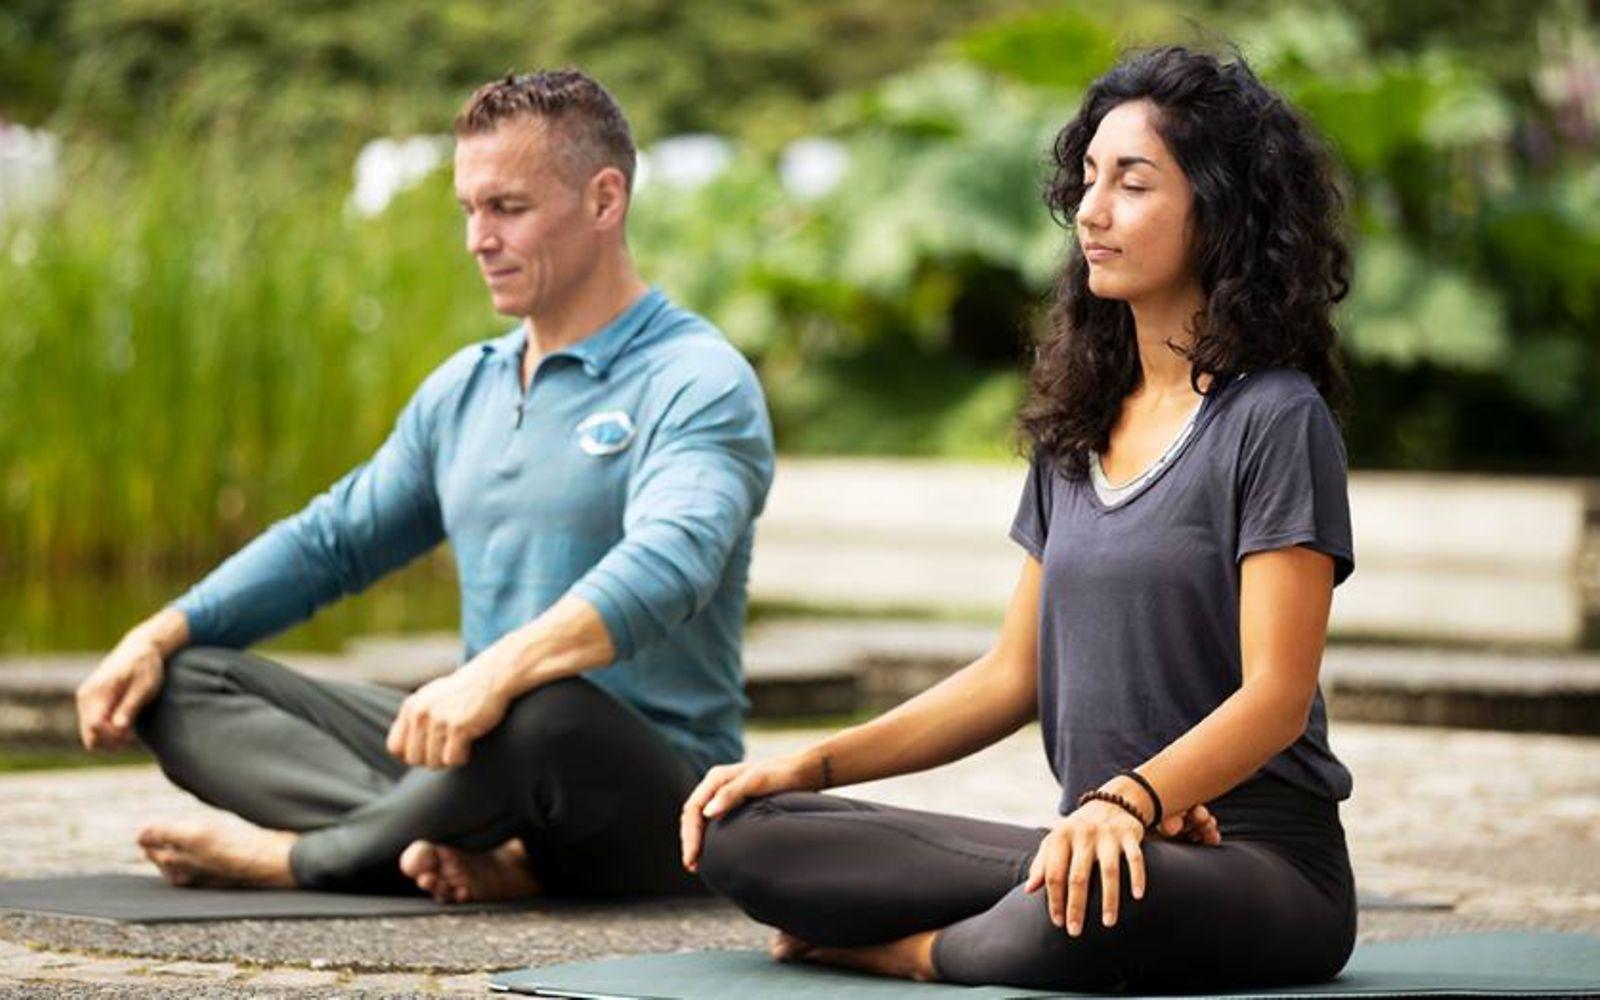 Patric Heizmann mit Yogalehrerin Sara Lyn im Yogasitz